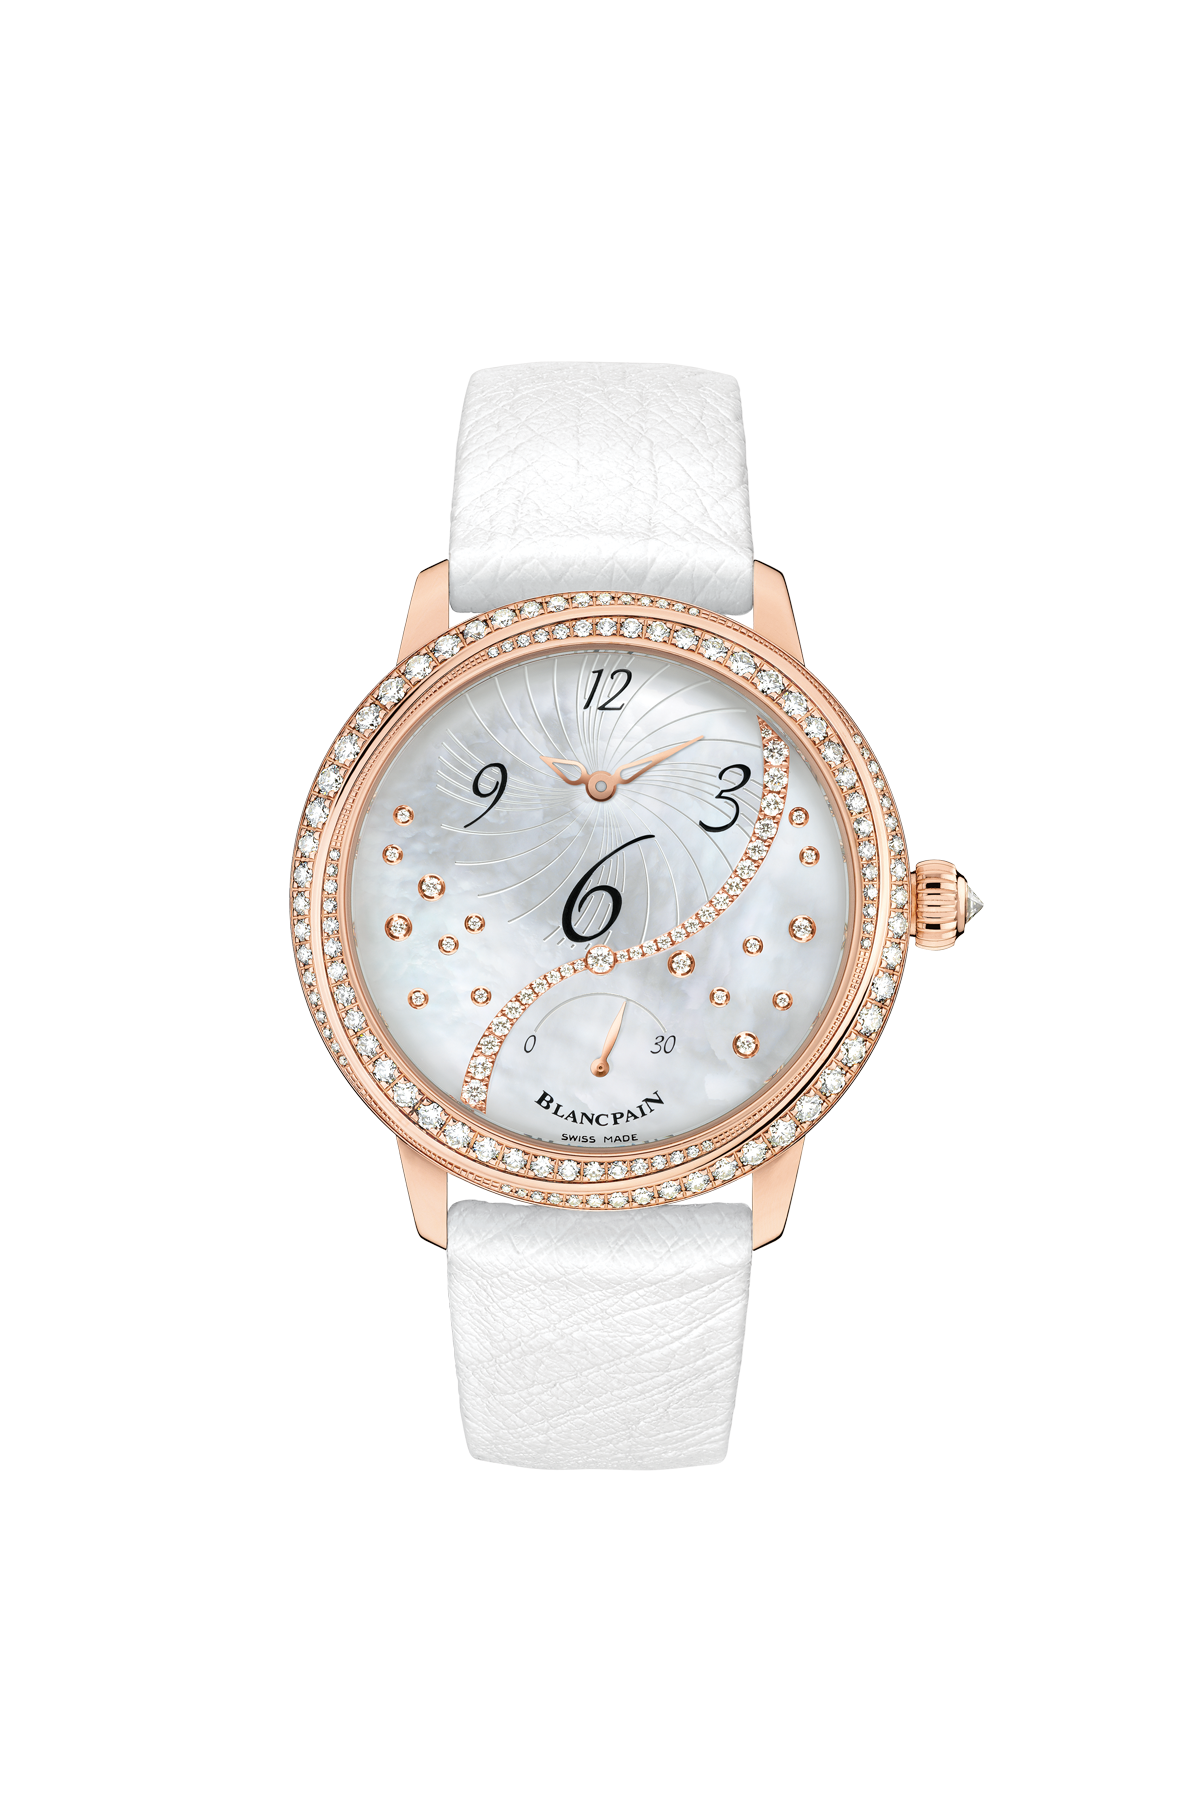 Blancpain Heure Decentree 18K Rose Gold Lady's Watch